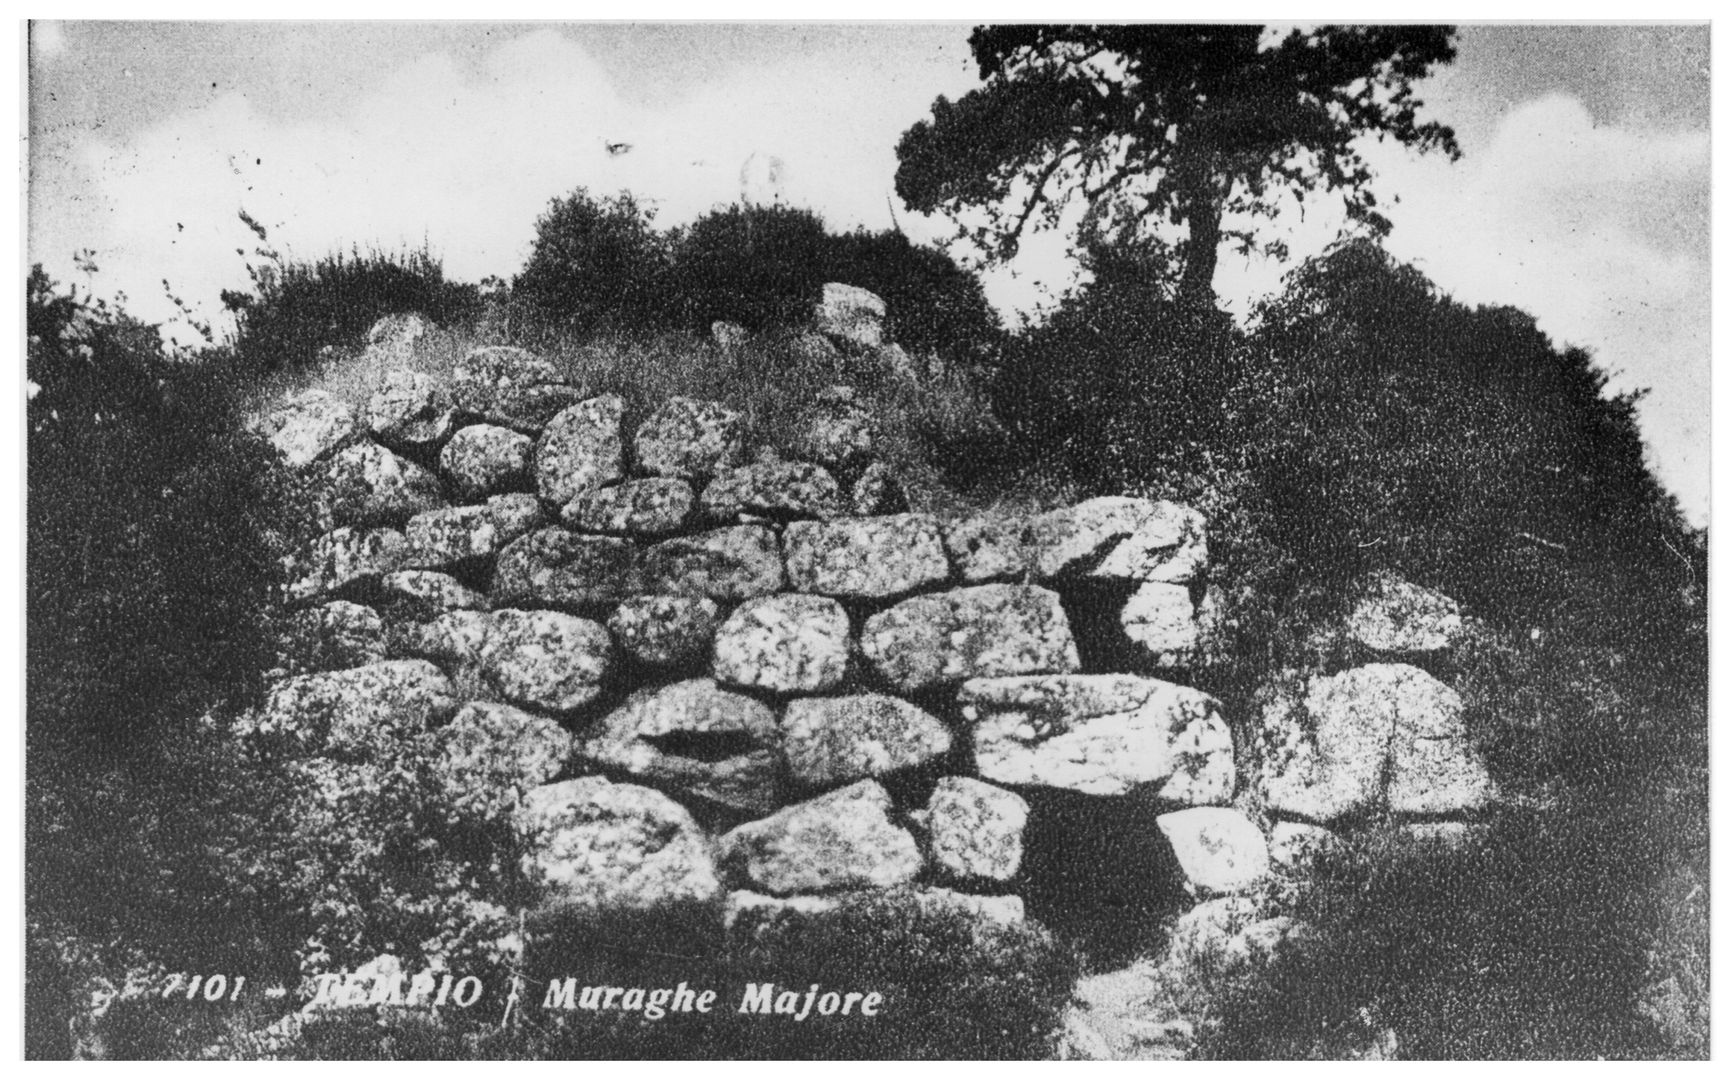 Nuraghe Majore,1930